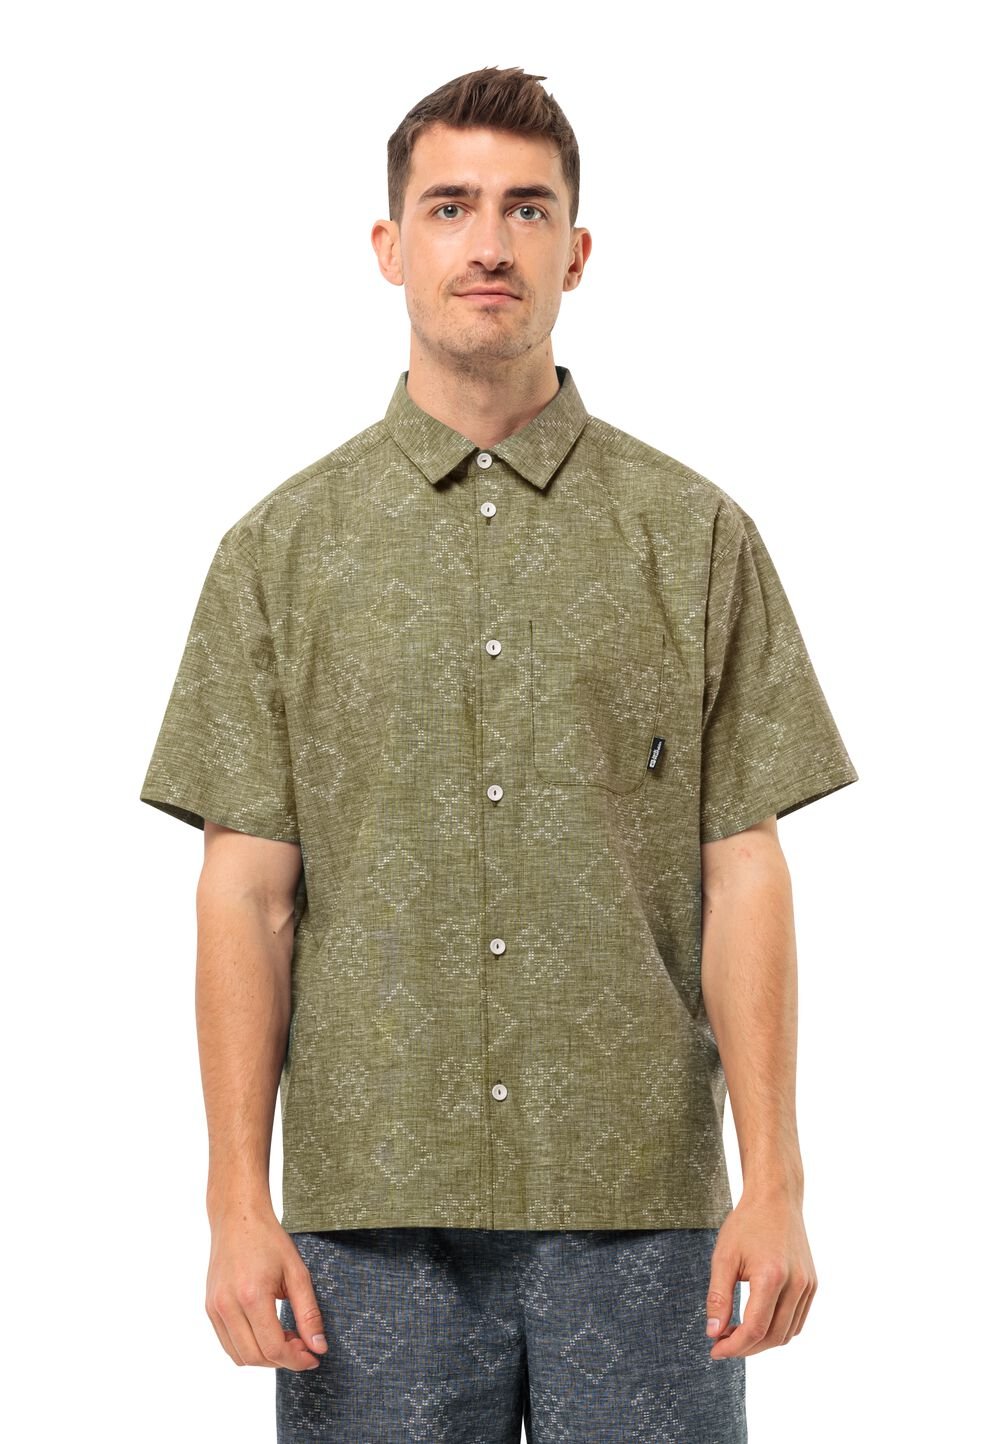 Jack Wolfskin Karana Shirt Men Overhemd met korte mouwen Heren M bruin bay leaf